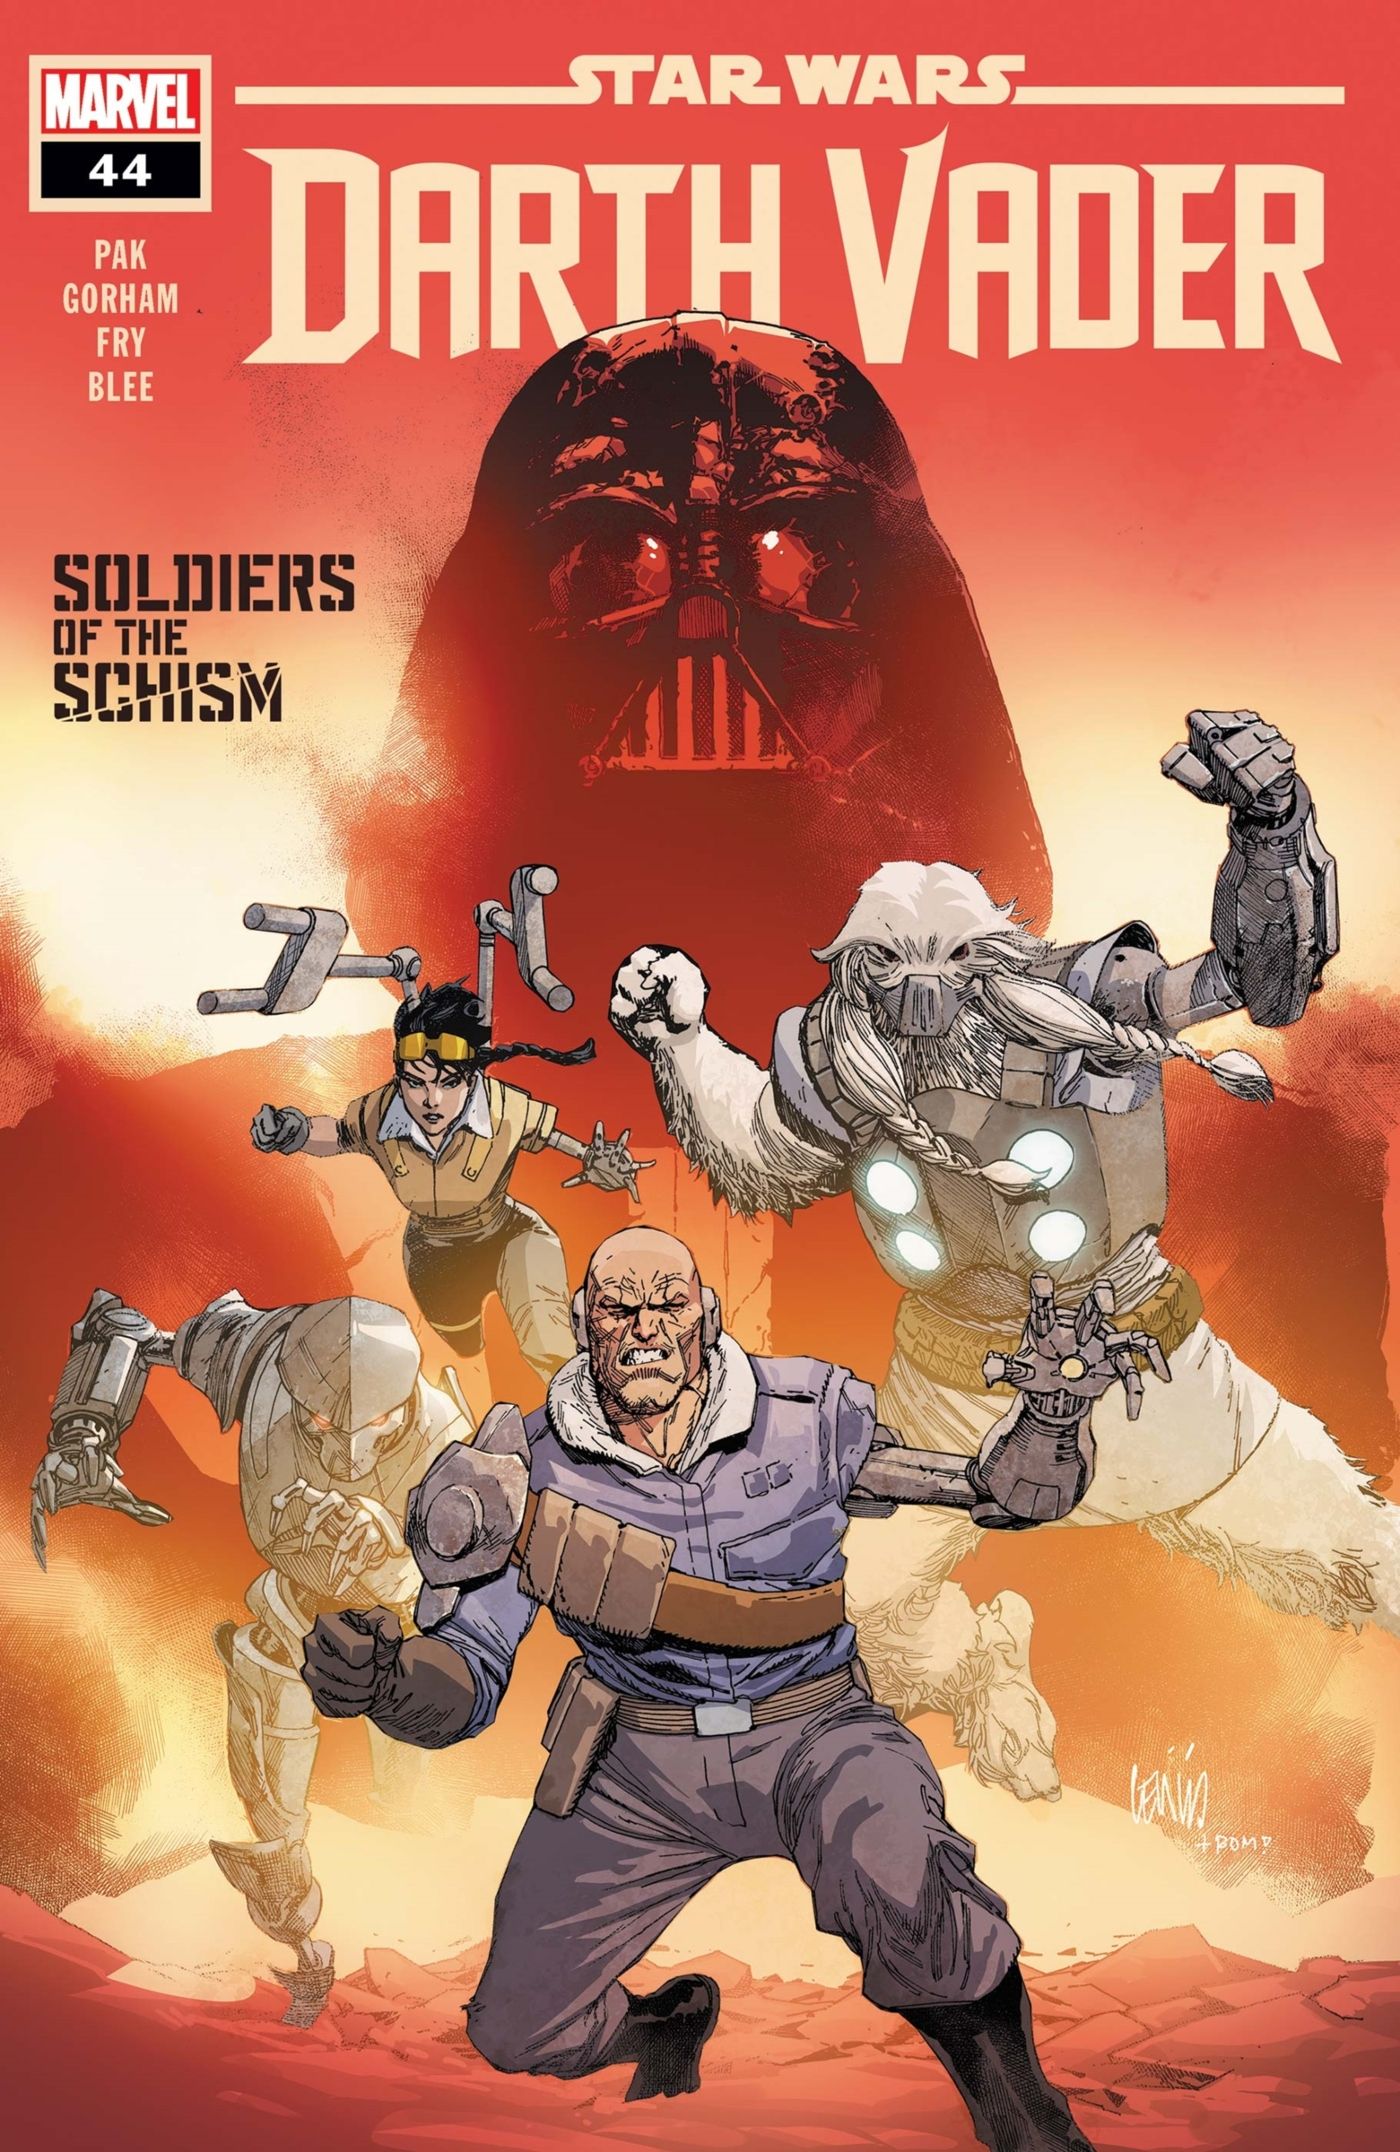 Capa de Star Wars: Darth Vader #44 apresentando Vader e seu exército ciborgue.